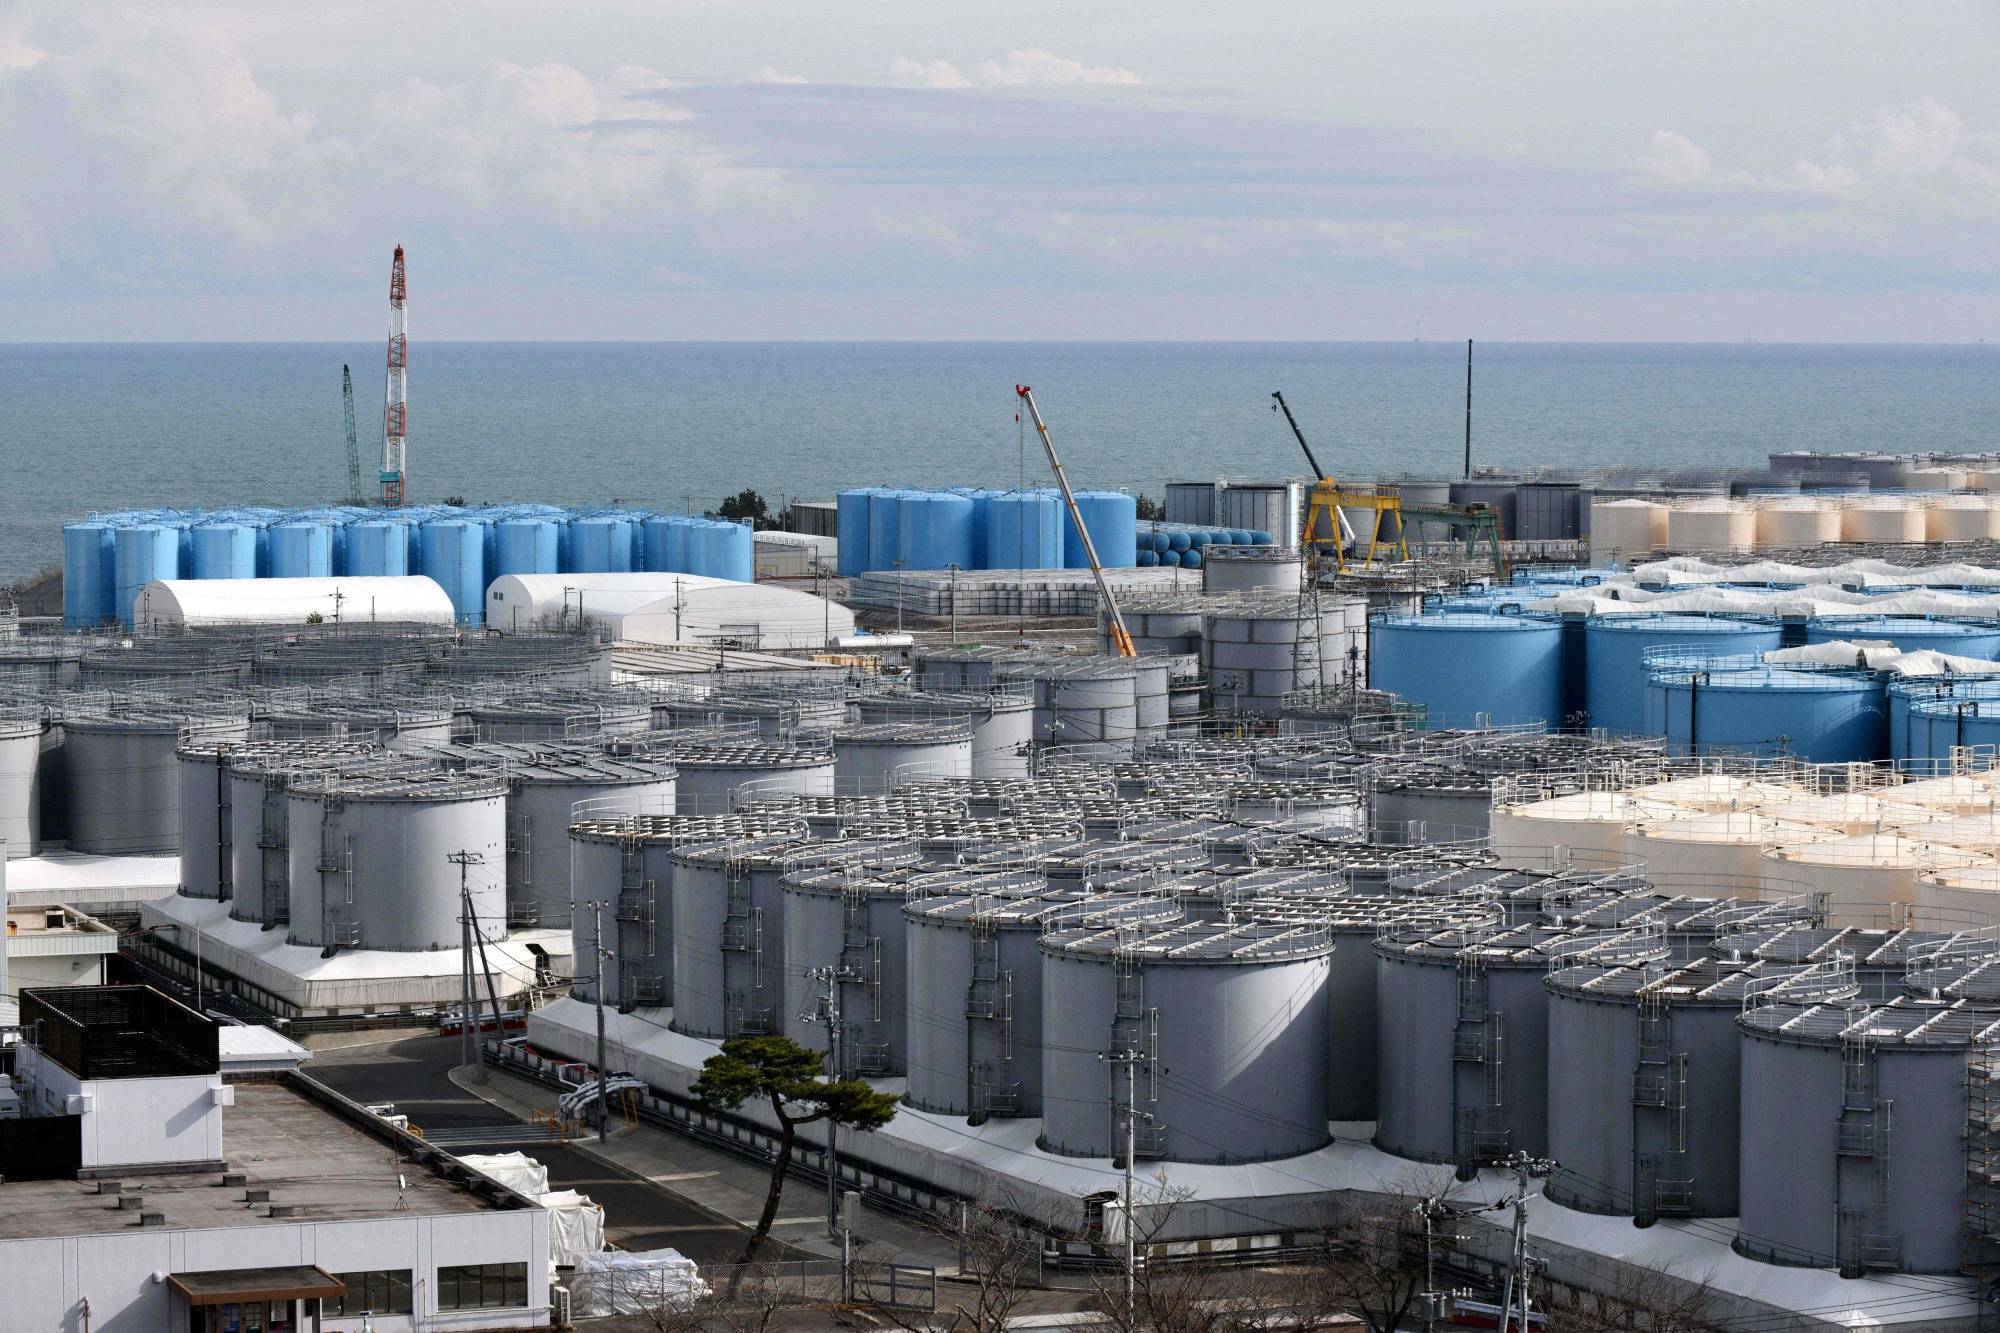 Storage tanks for contaminated water at the Fukushima No 1 nuclear power plant in Okuma, Fukushima, in February 2020. — AFP/File